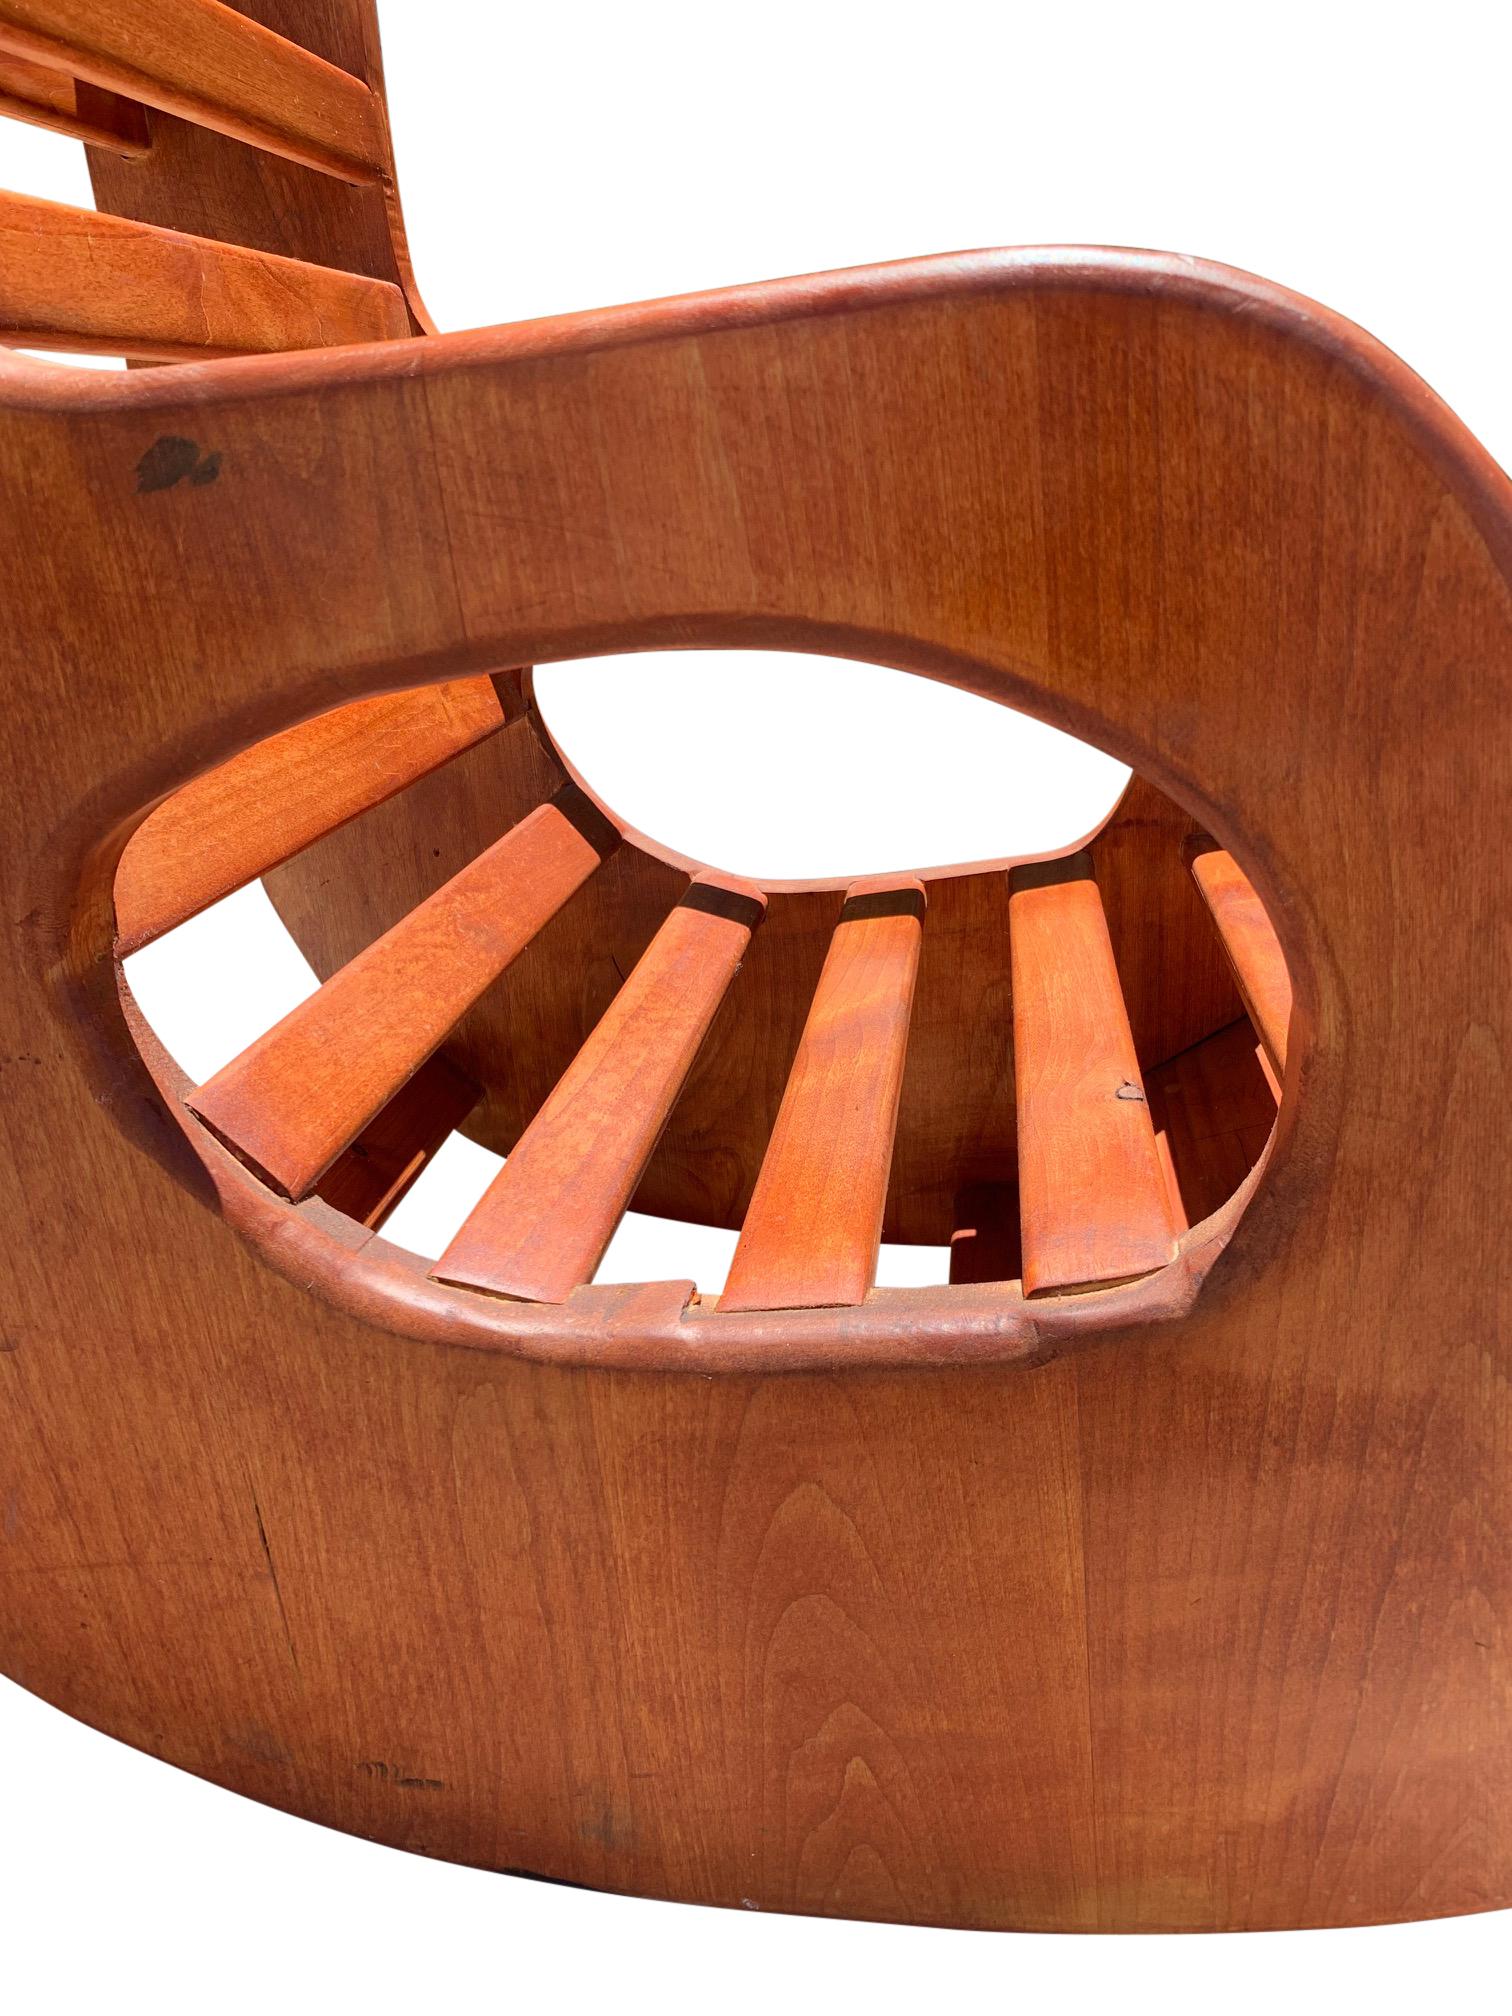 North American American Studio Craft Wood Rocking Chair Mid-Century Modern